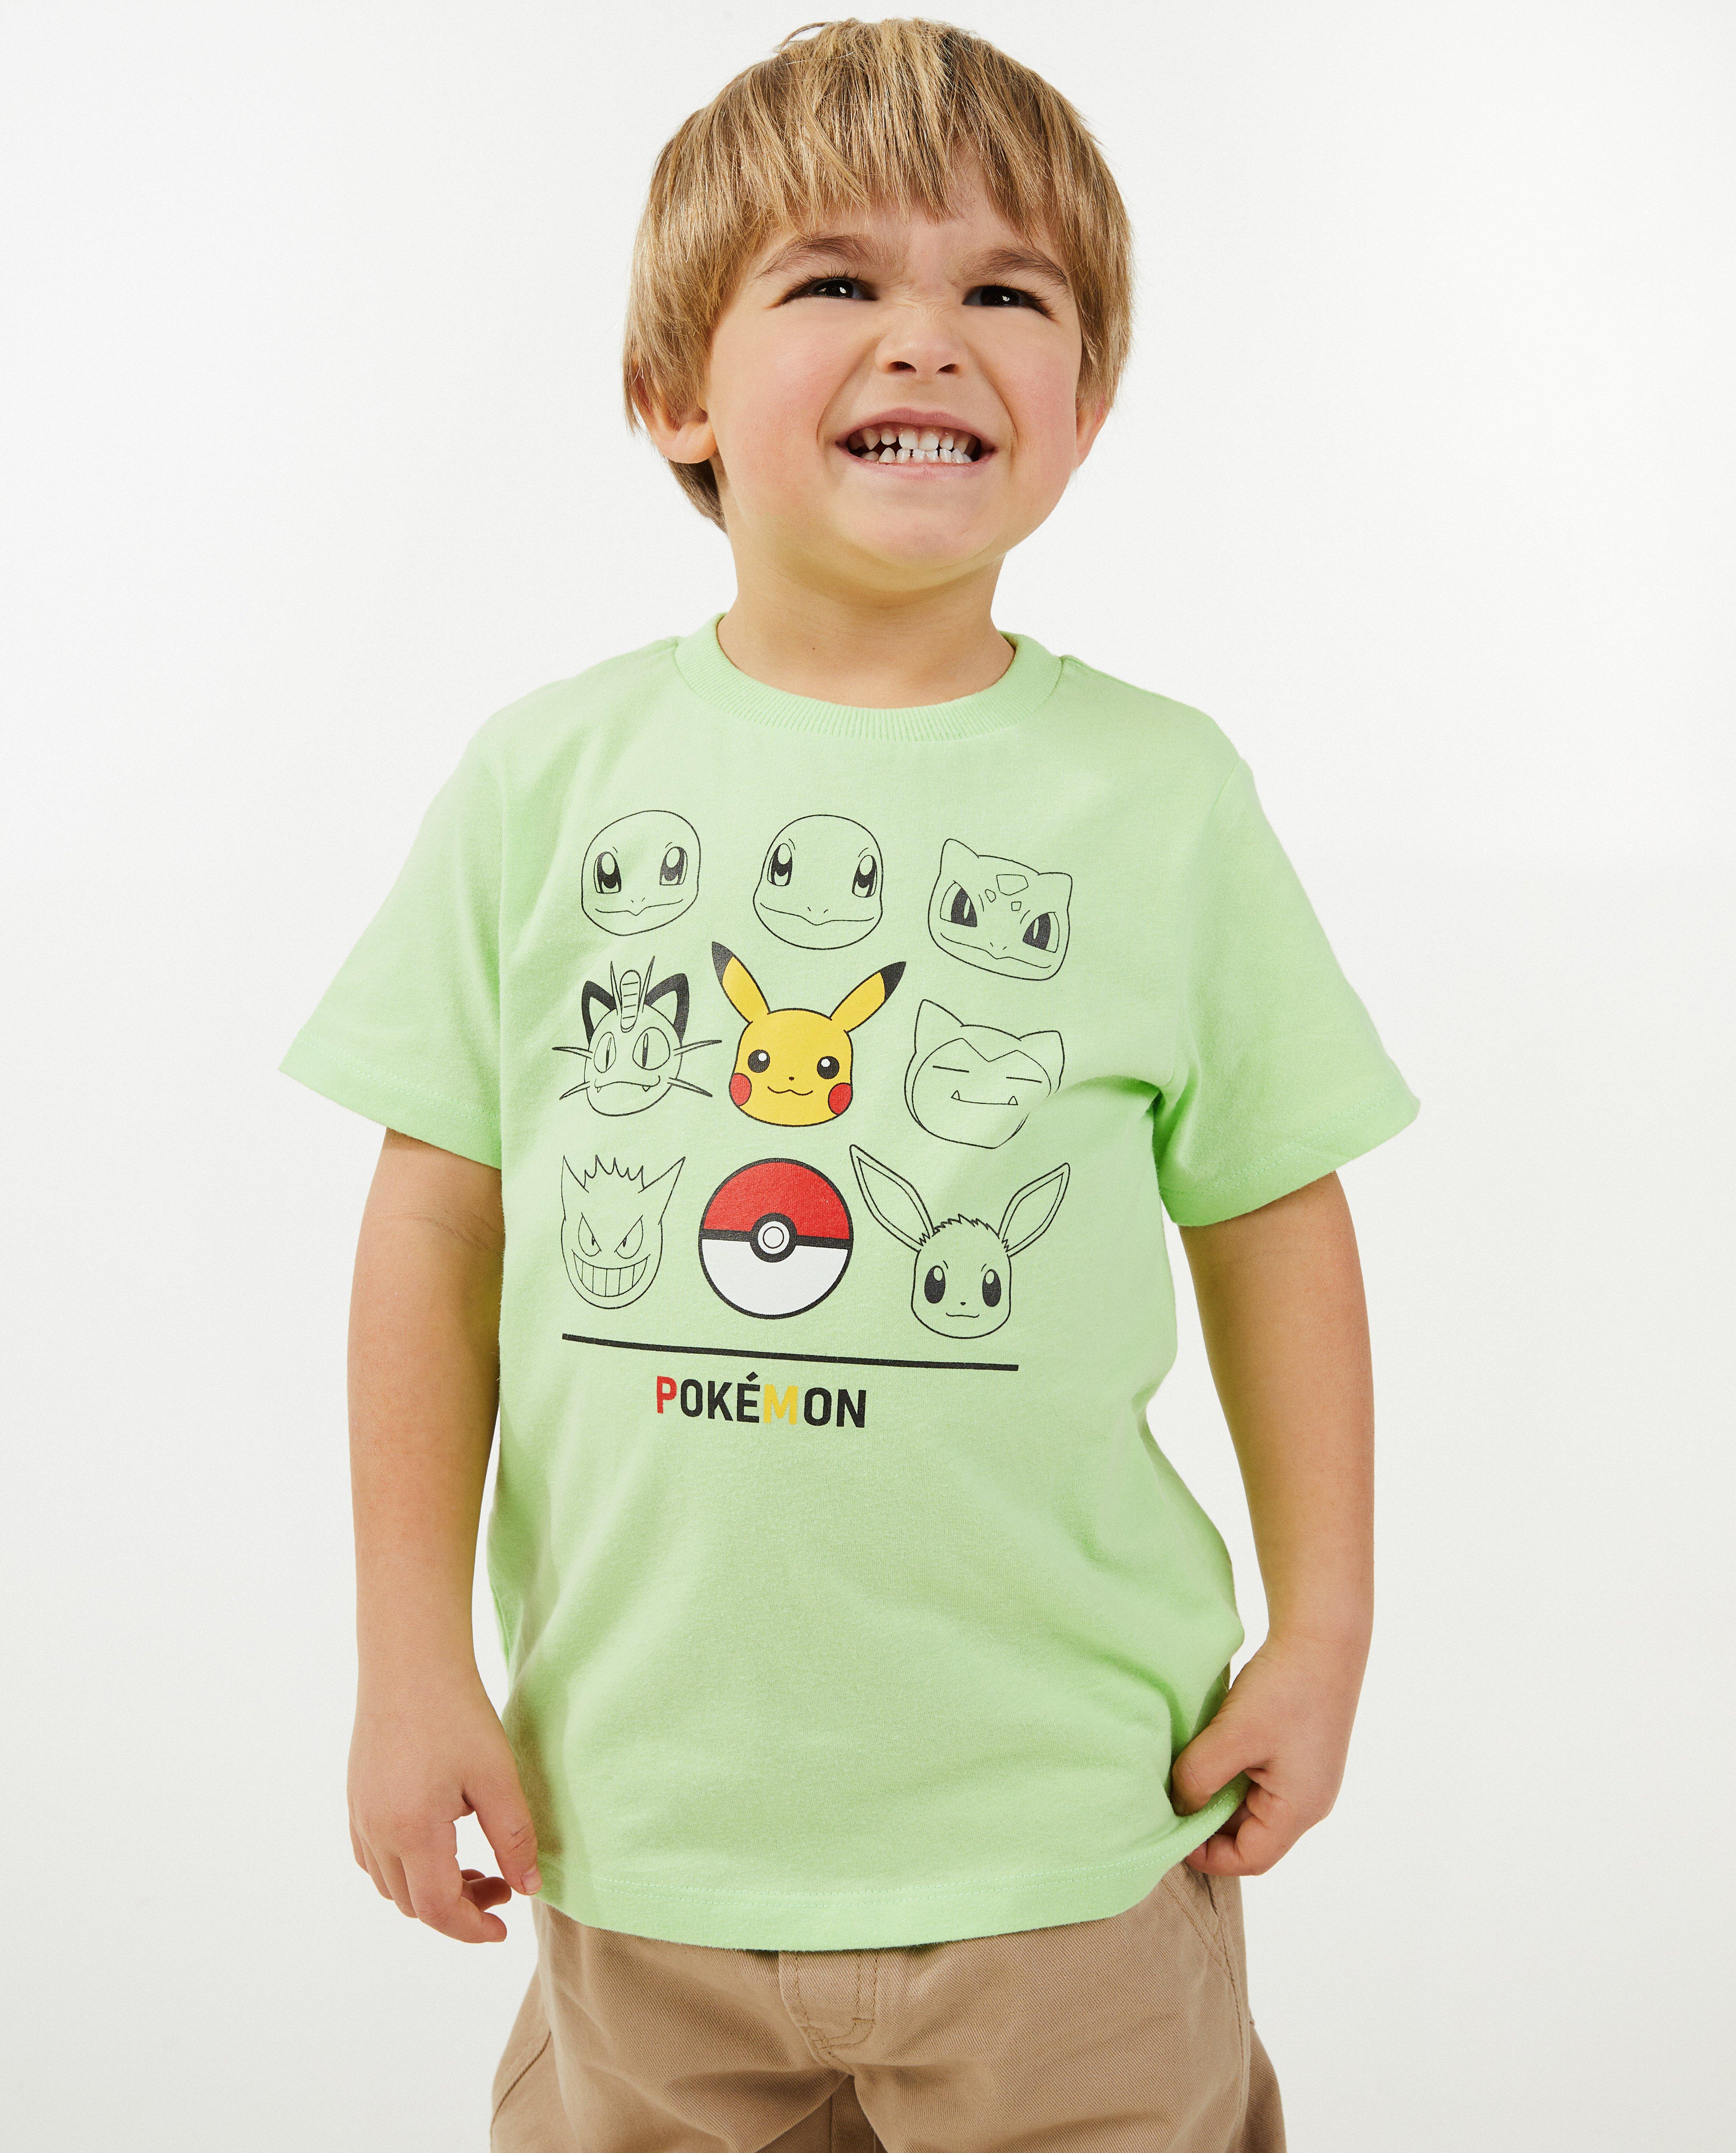 T-shirts - Lichtgroen T-shirt, Pokémon